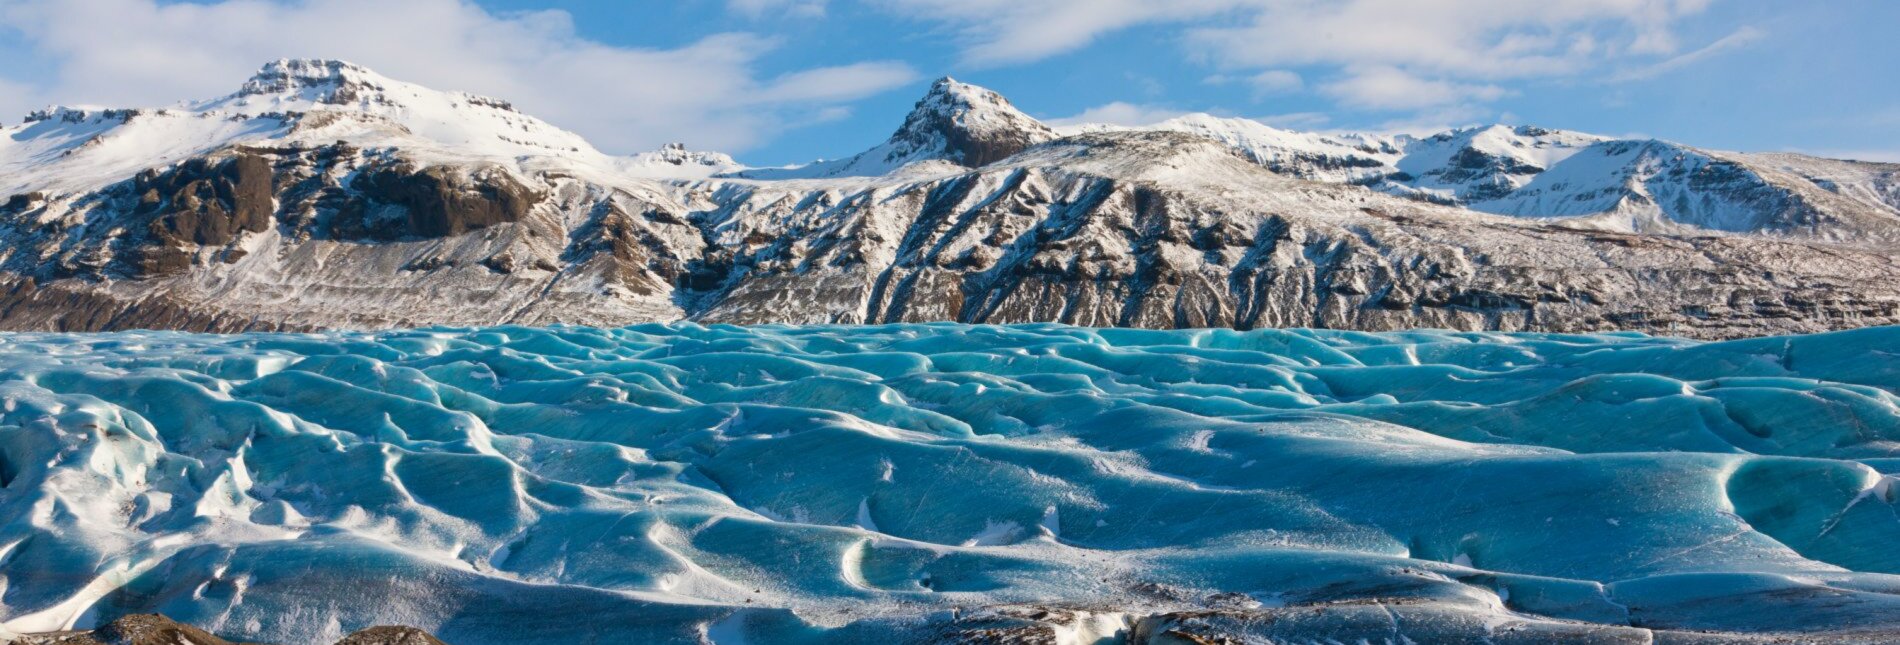 Island Gletscherlandschaft